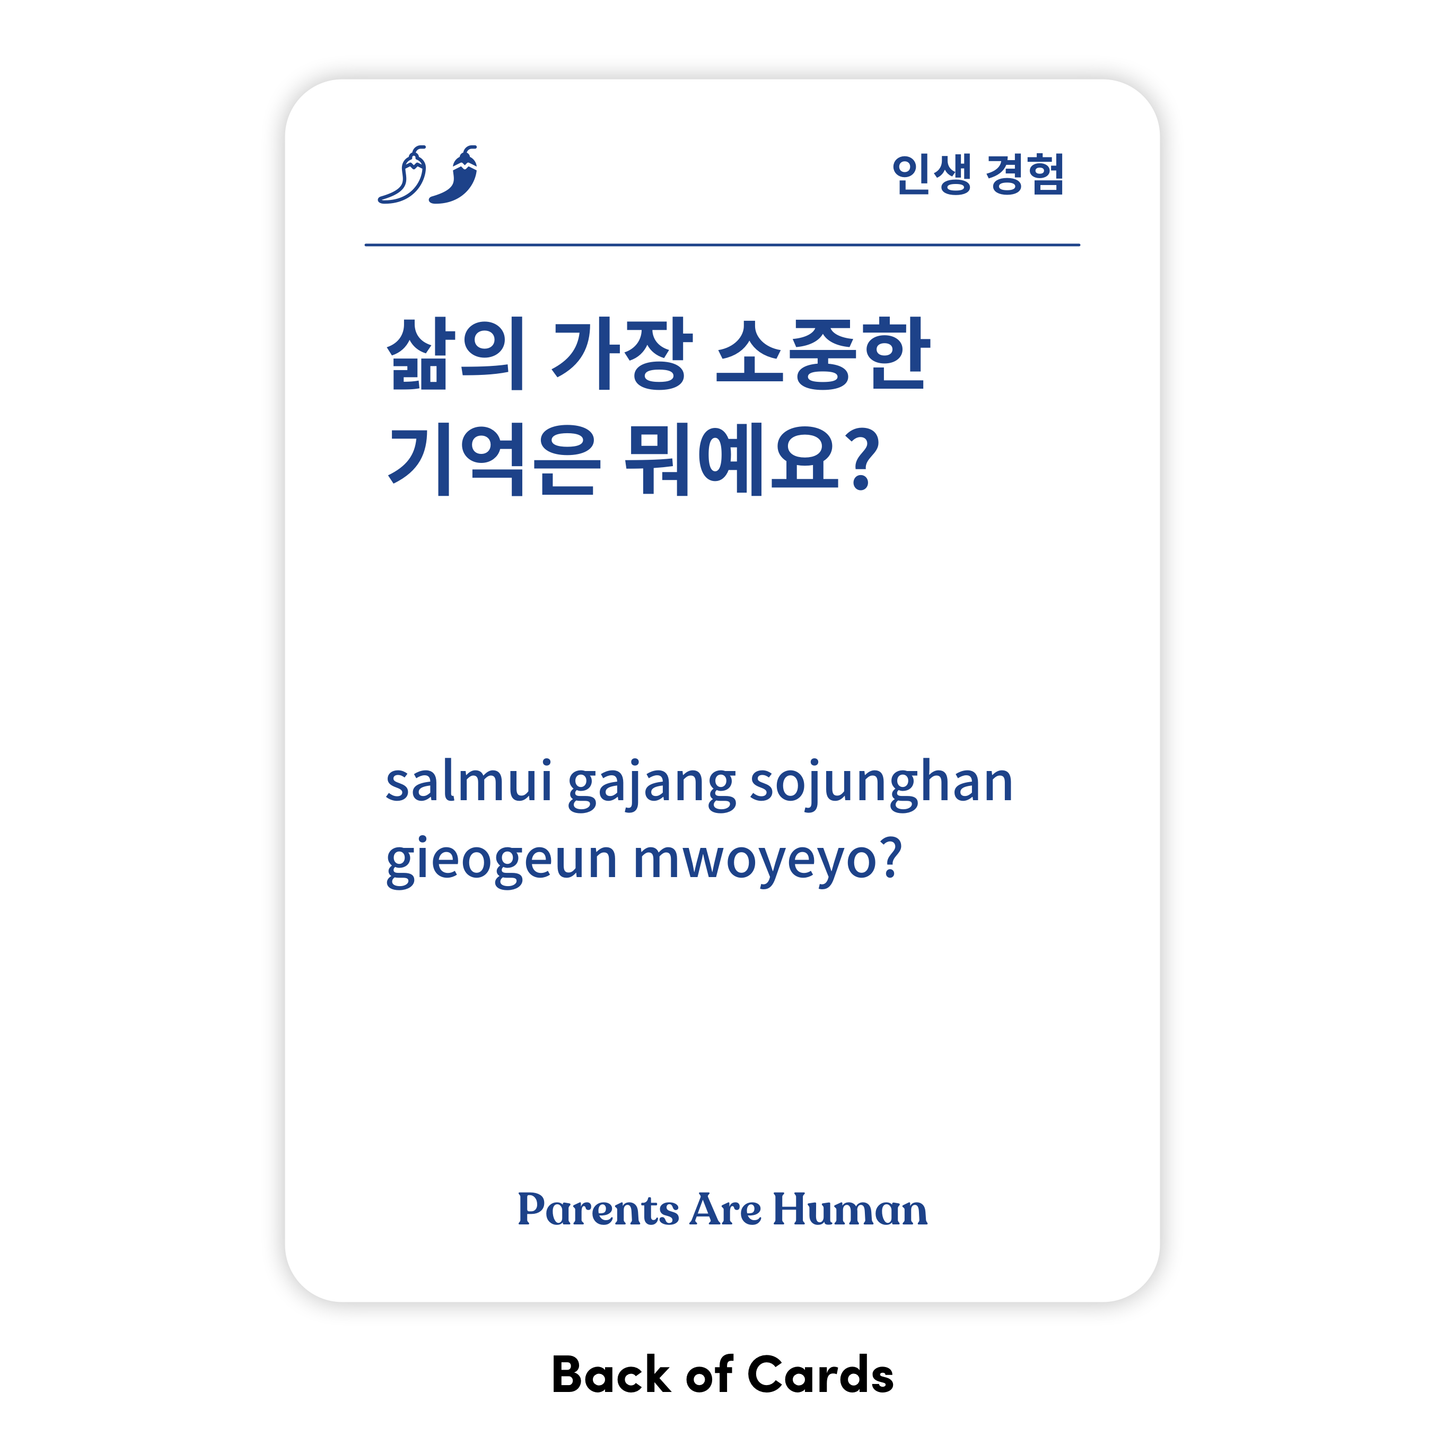 Parents Are Human (English + Korean)